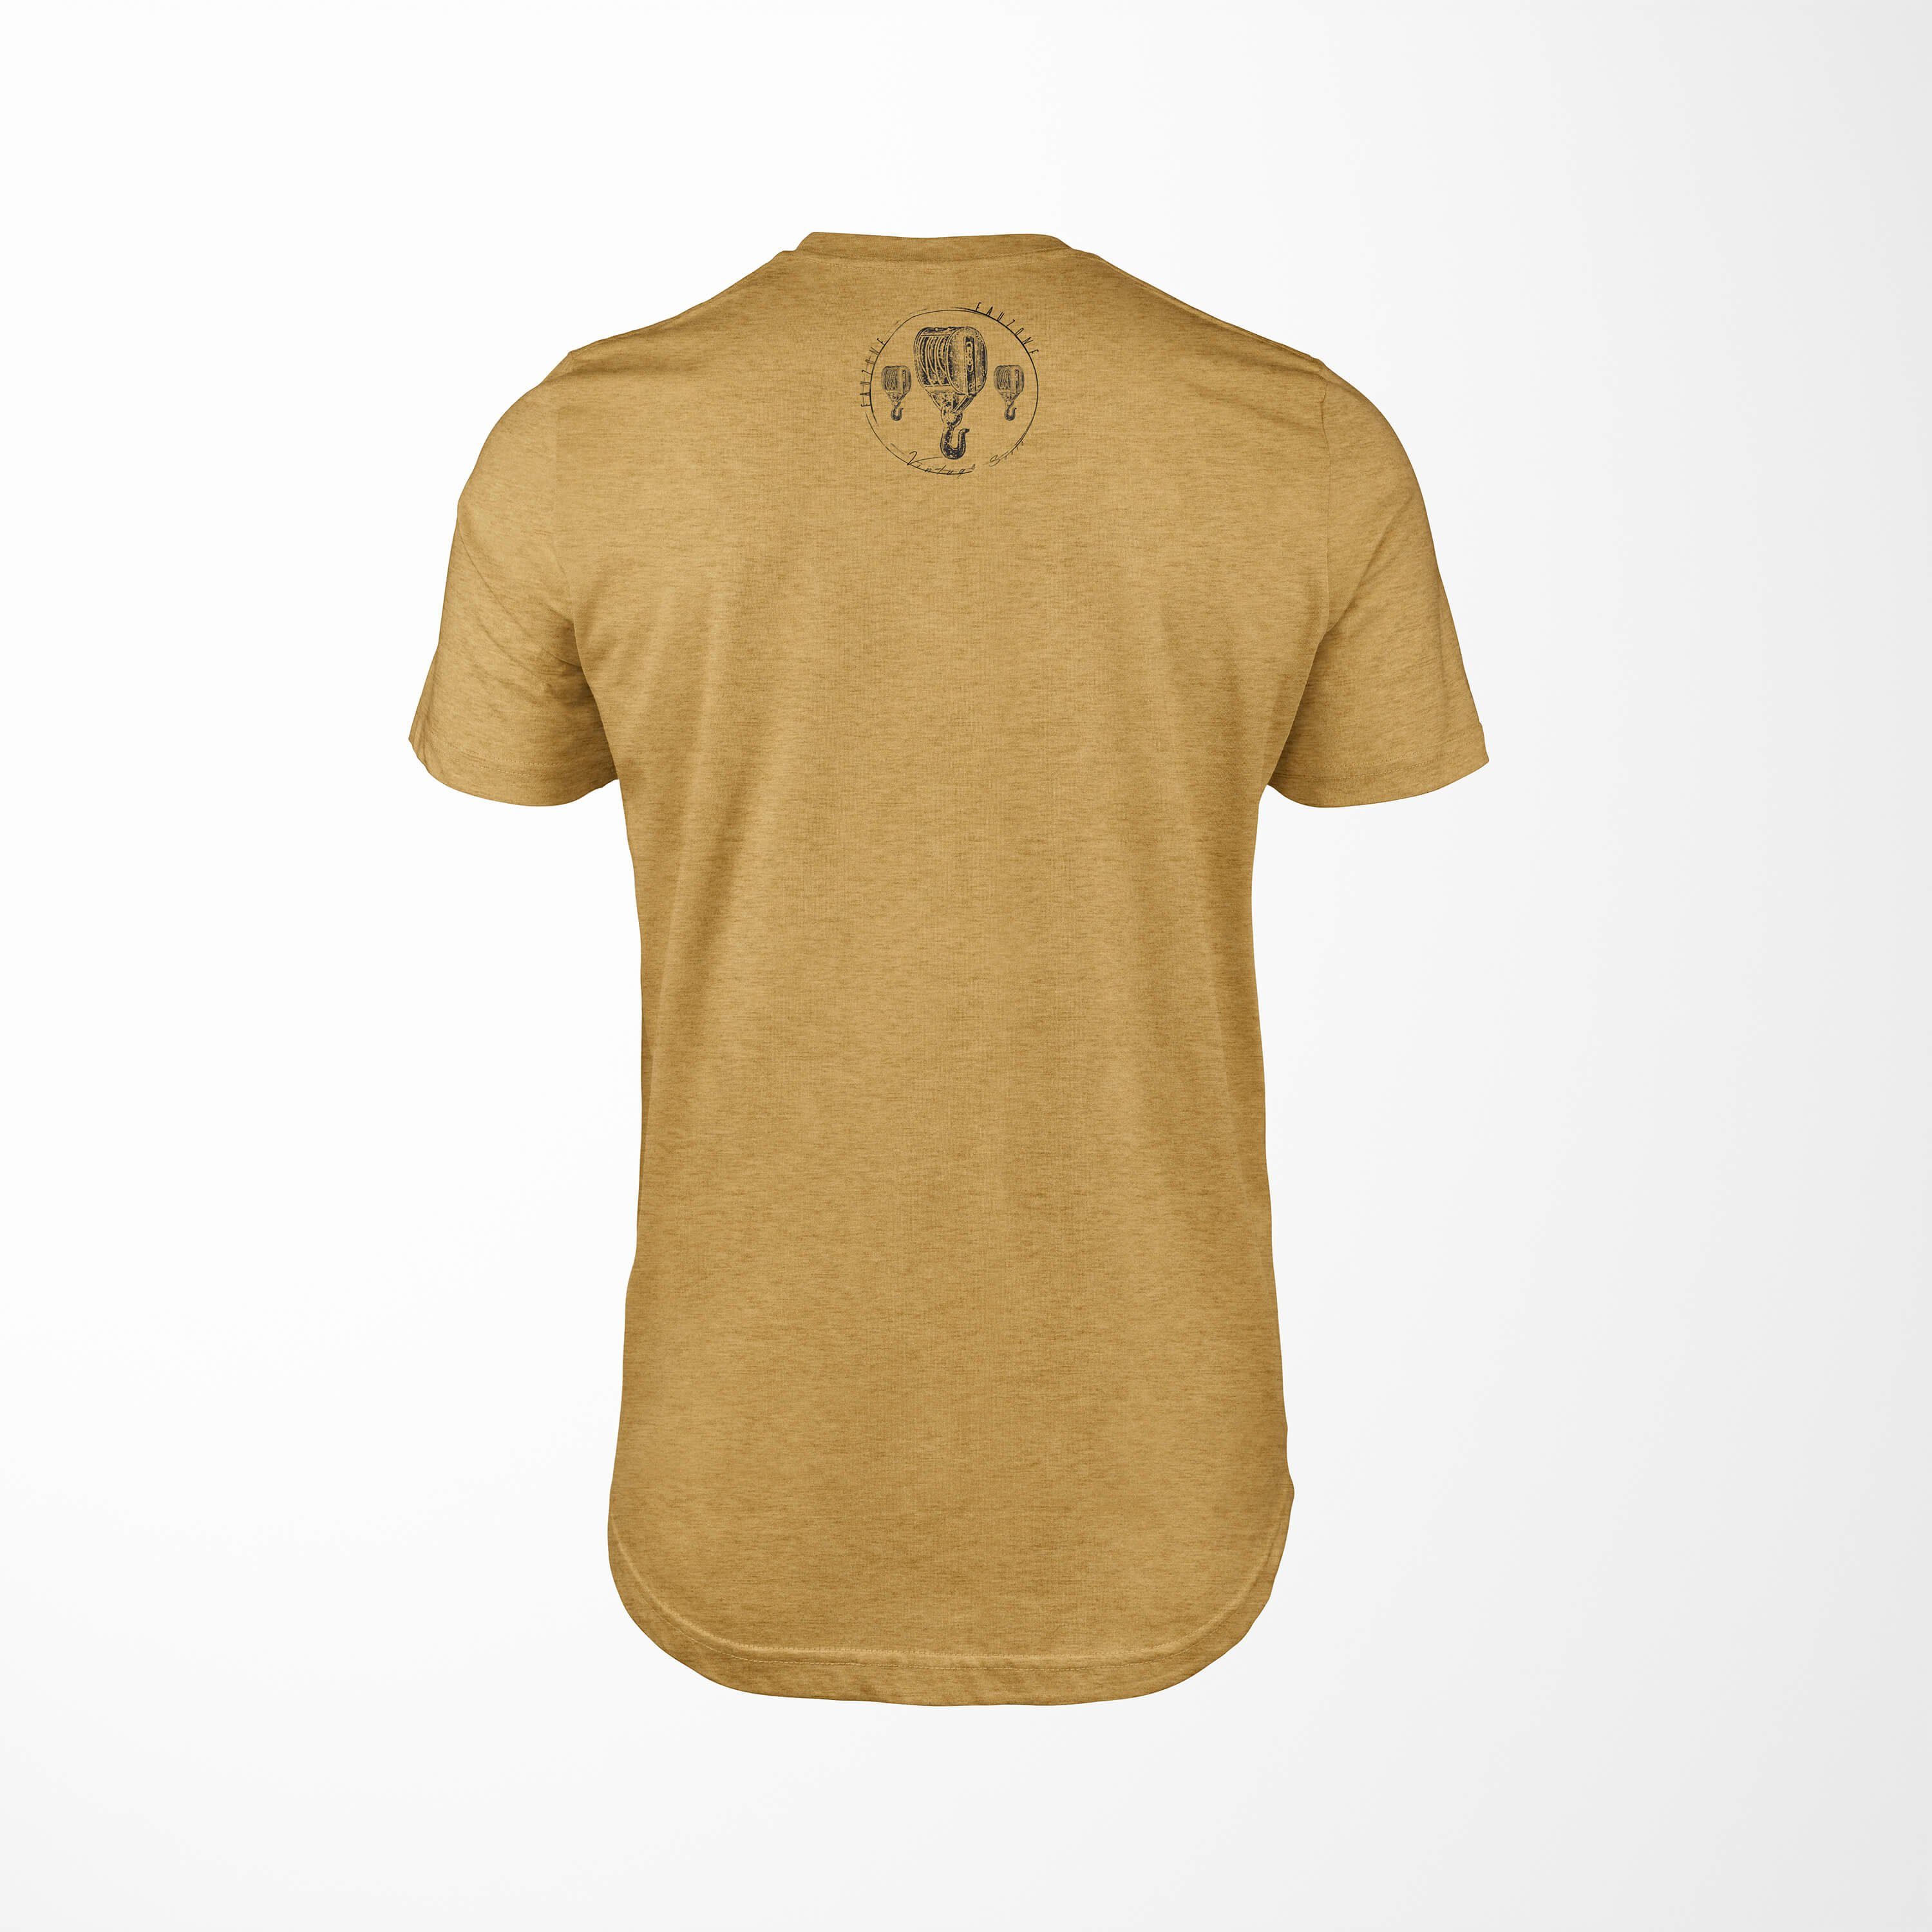 Antique Herren T-Shirt Vintage Sinus Gold Seilzug Art T-Shirt